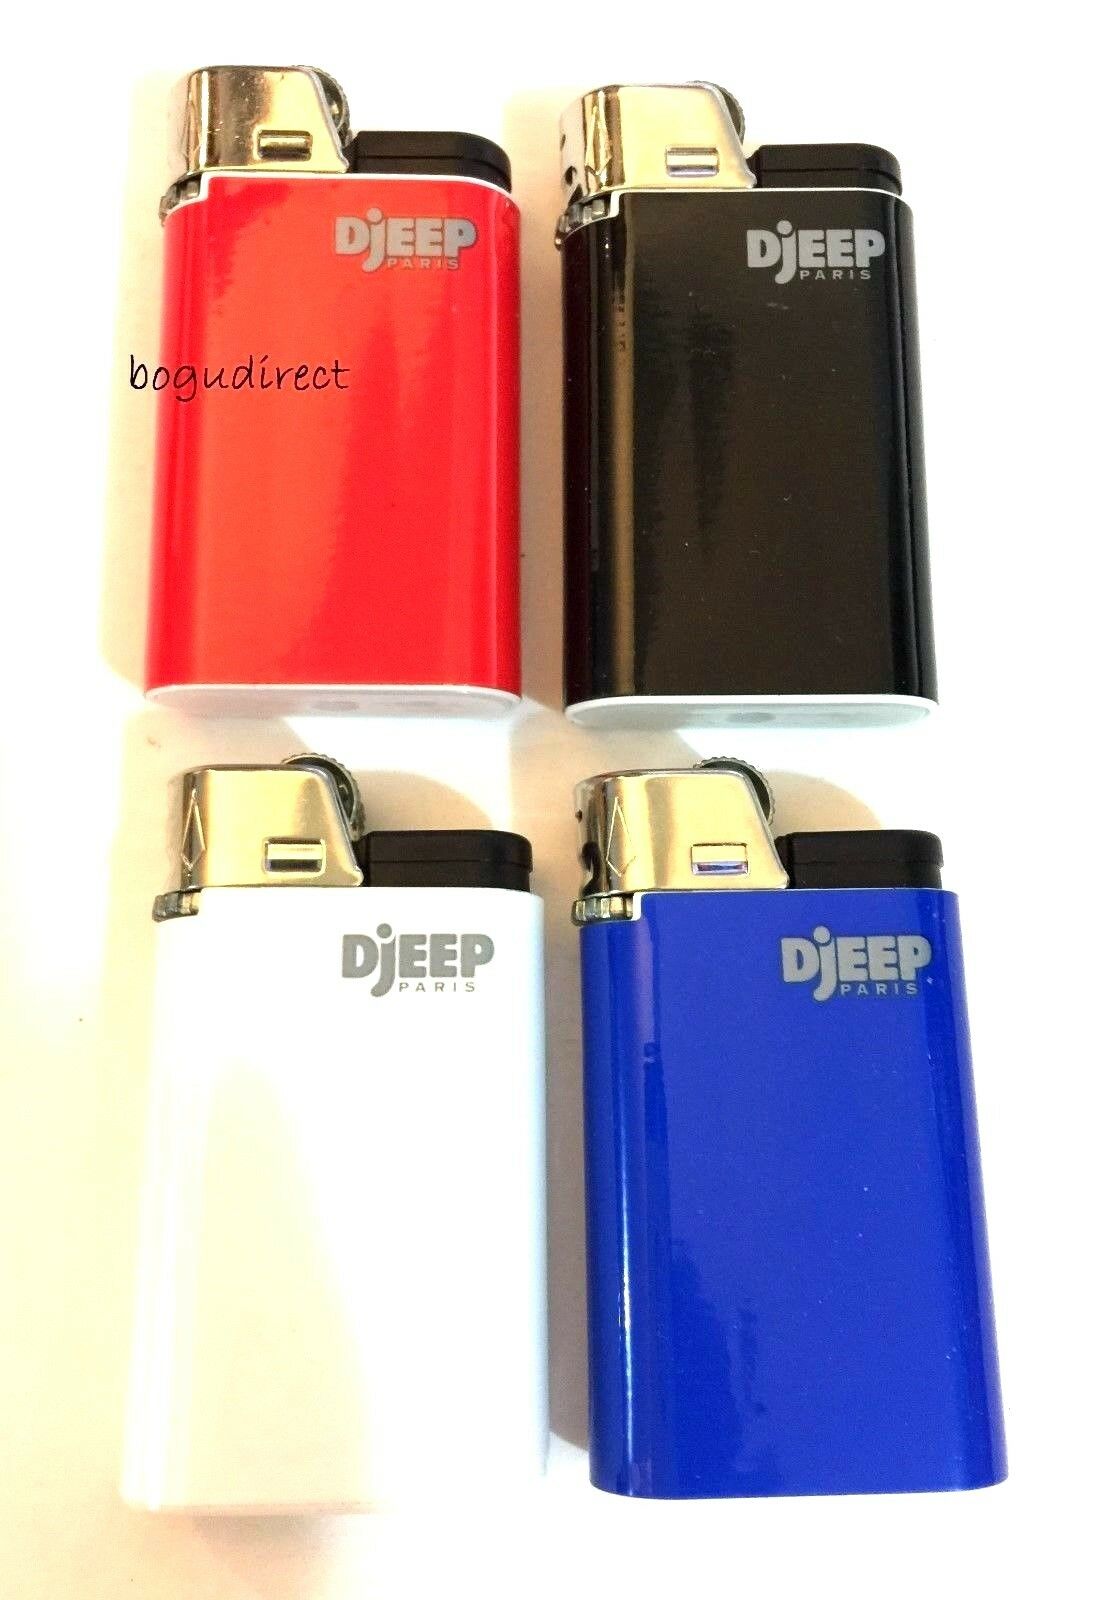 Djeep Large Lighter Regular Colors 4 Pcs